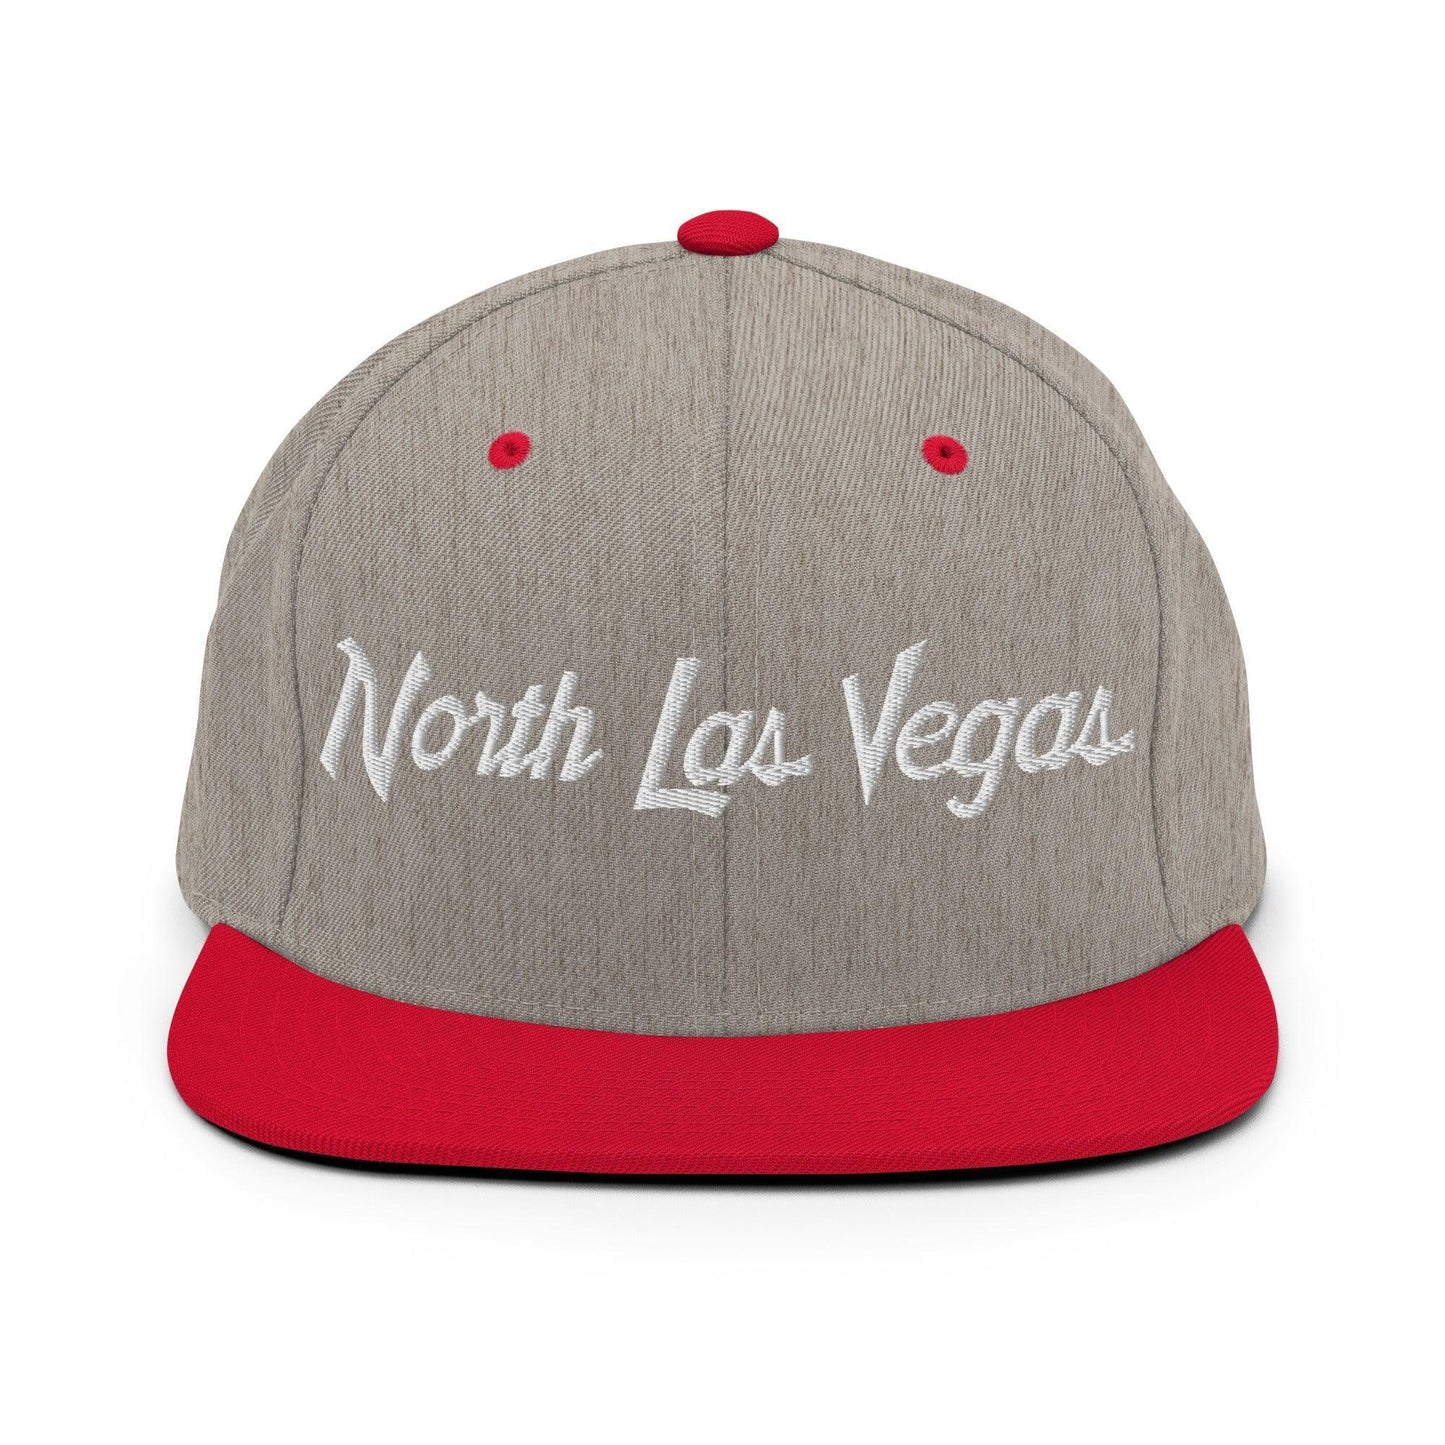 North Las Vegas Script Snapback Hat Heather Grey Red